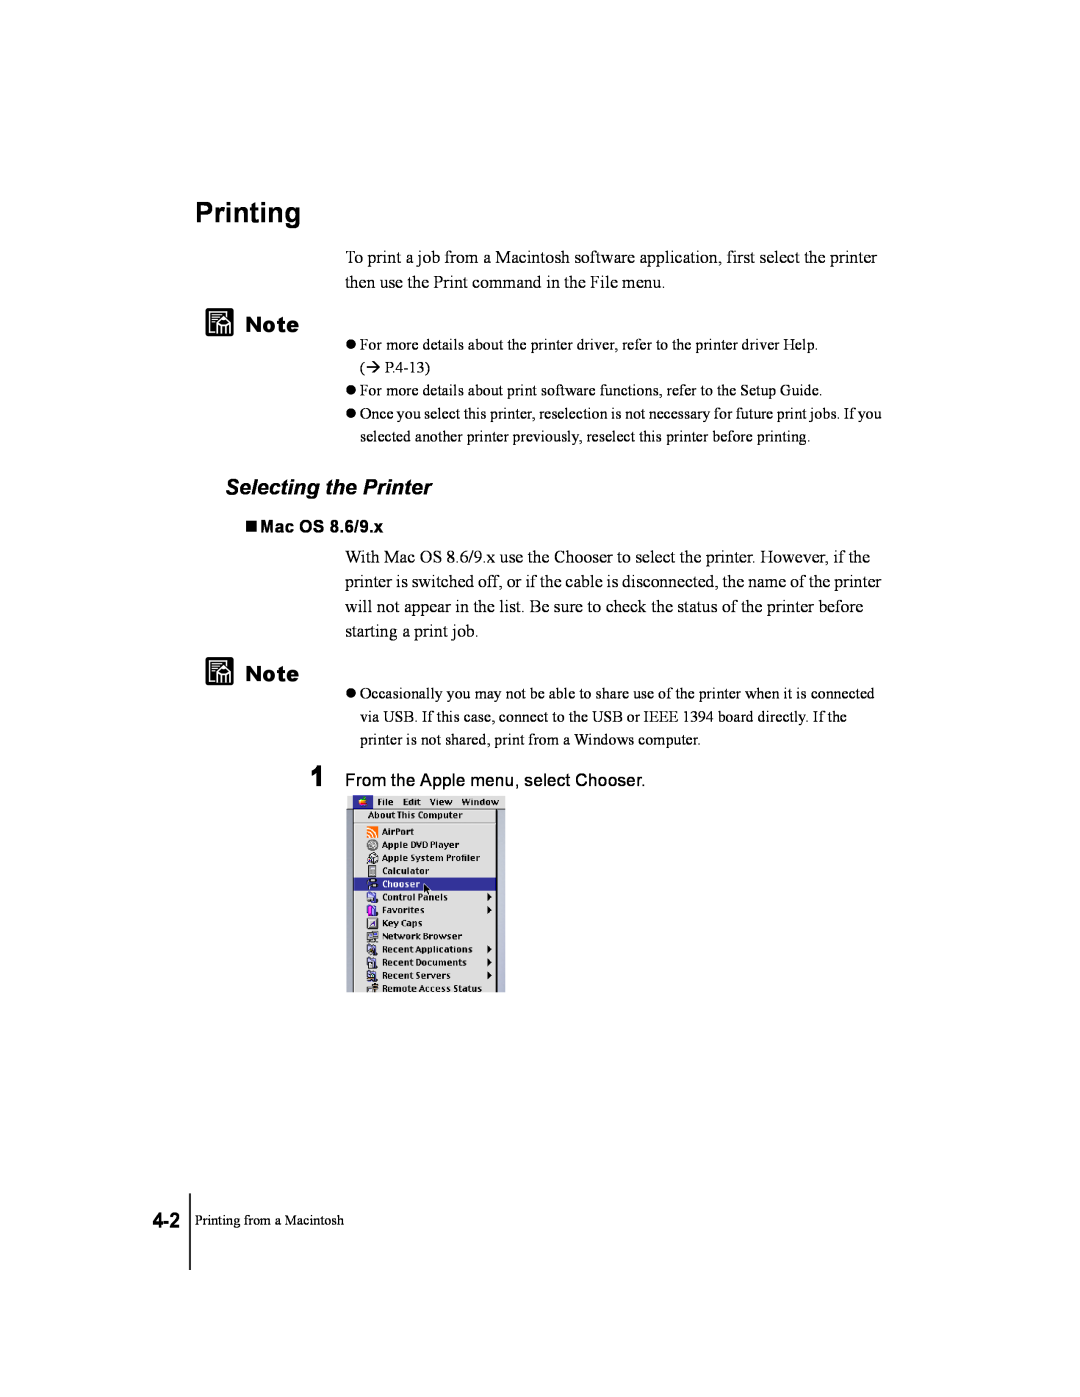 Canon W2200 manual Selecting the Printer, T Mac OS 8.6/9.x, Printing 